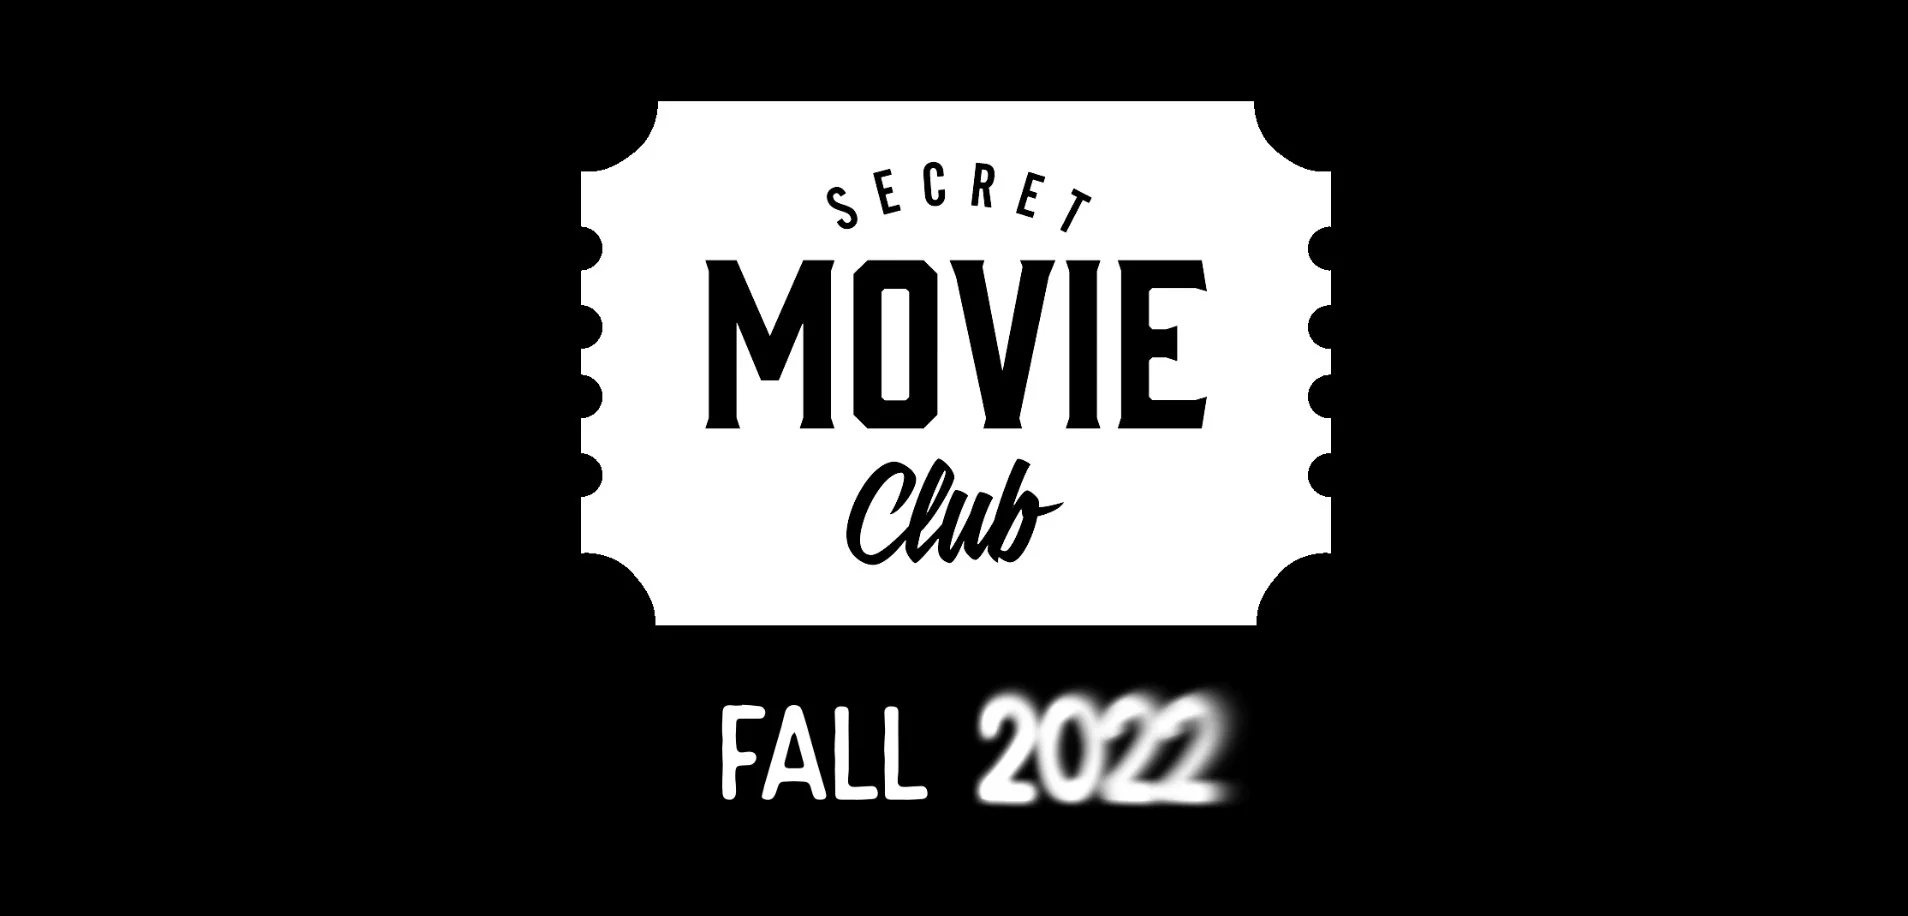 About — Secret Movie Club